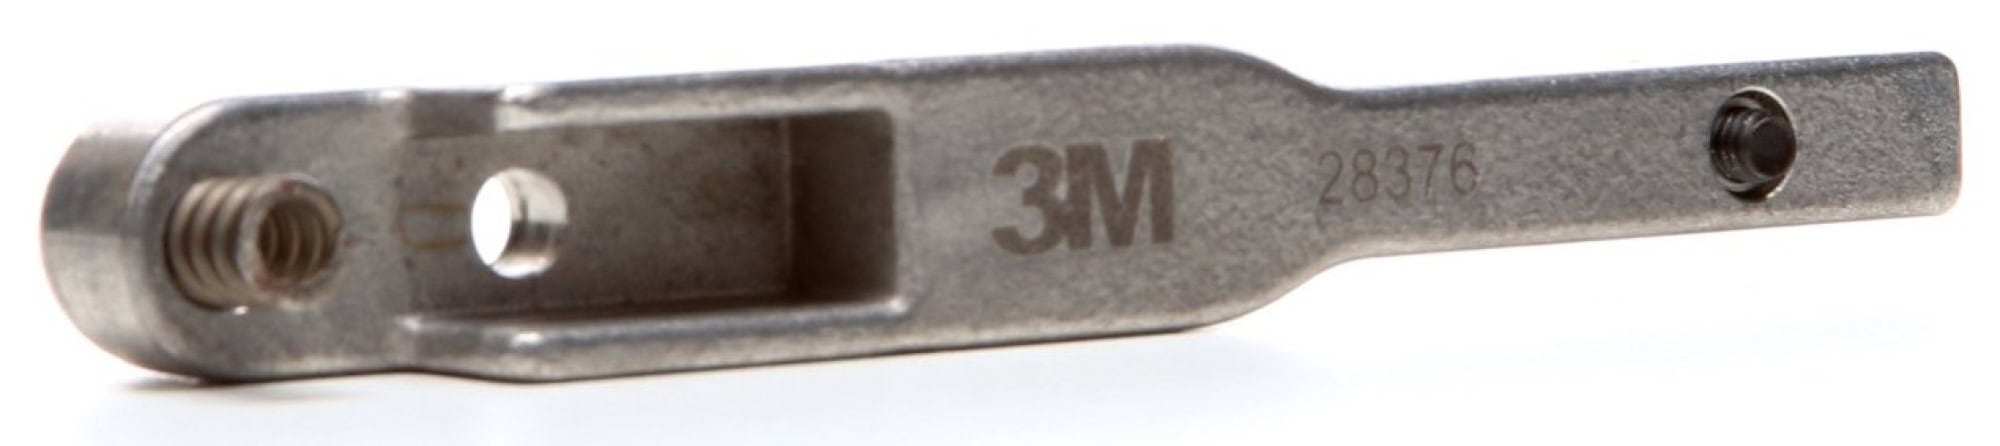 3M™ 28376, 153 mm, Gerade, Kontaktarm Verlängerung für Feilenbandmaschinen Kontaktarme Nr.: 28368, 28369, 28370, 28371, 28372, 28374